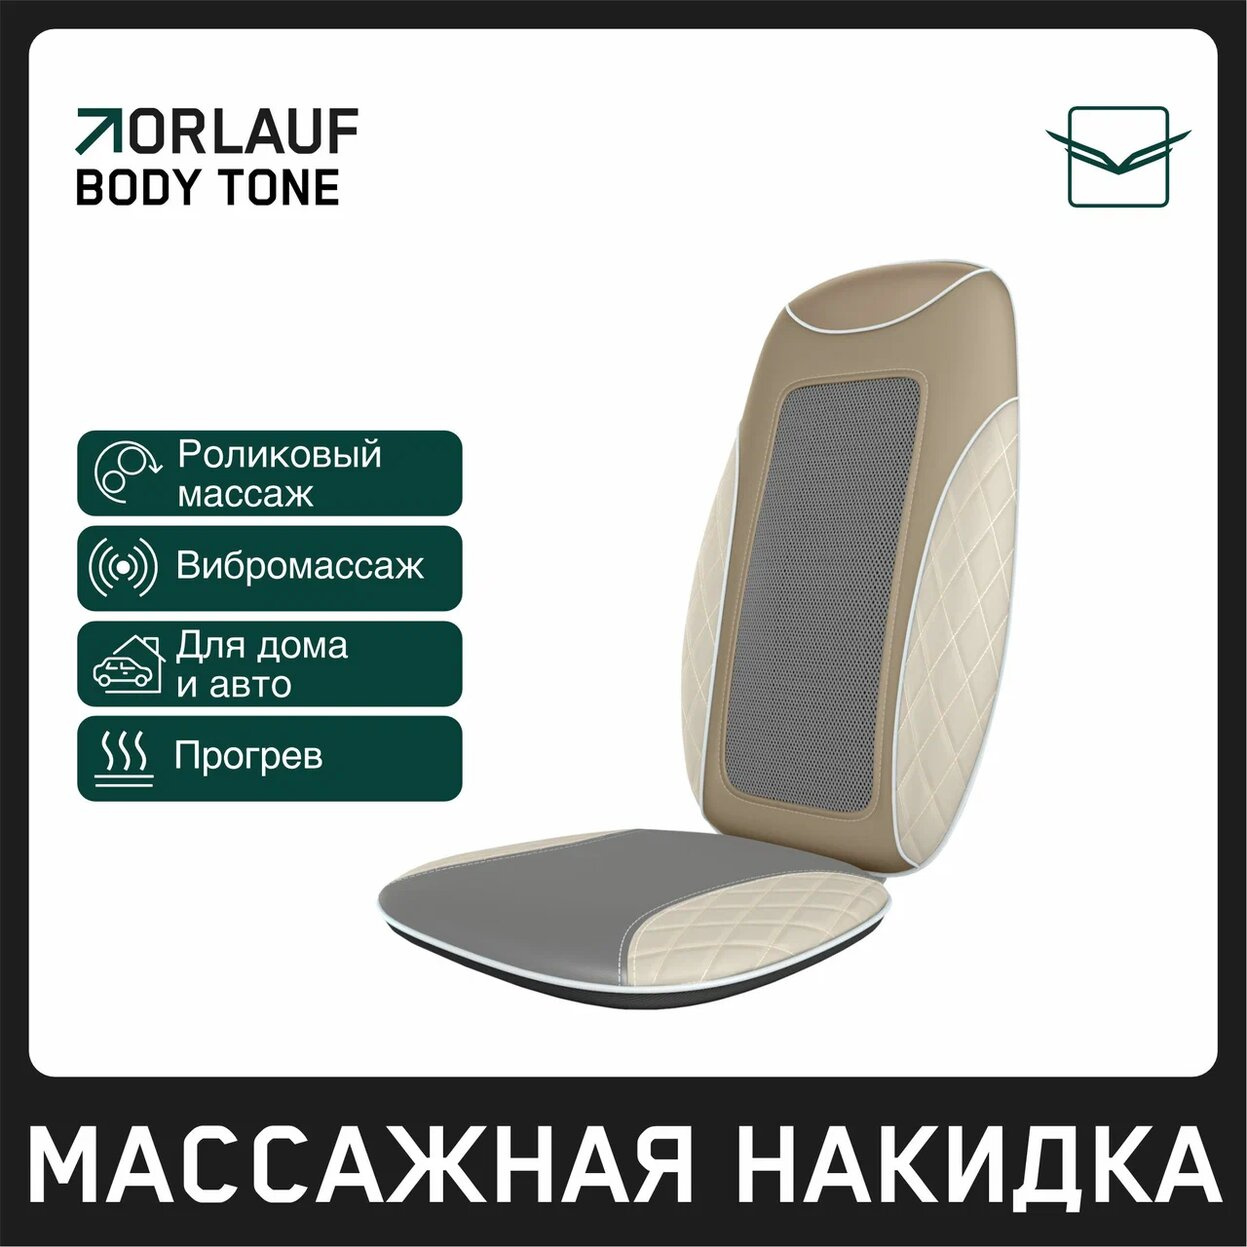 Orlauf Body Tone из каталога устройств для массажа в Челябинске по цене 15400 ₽